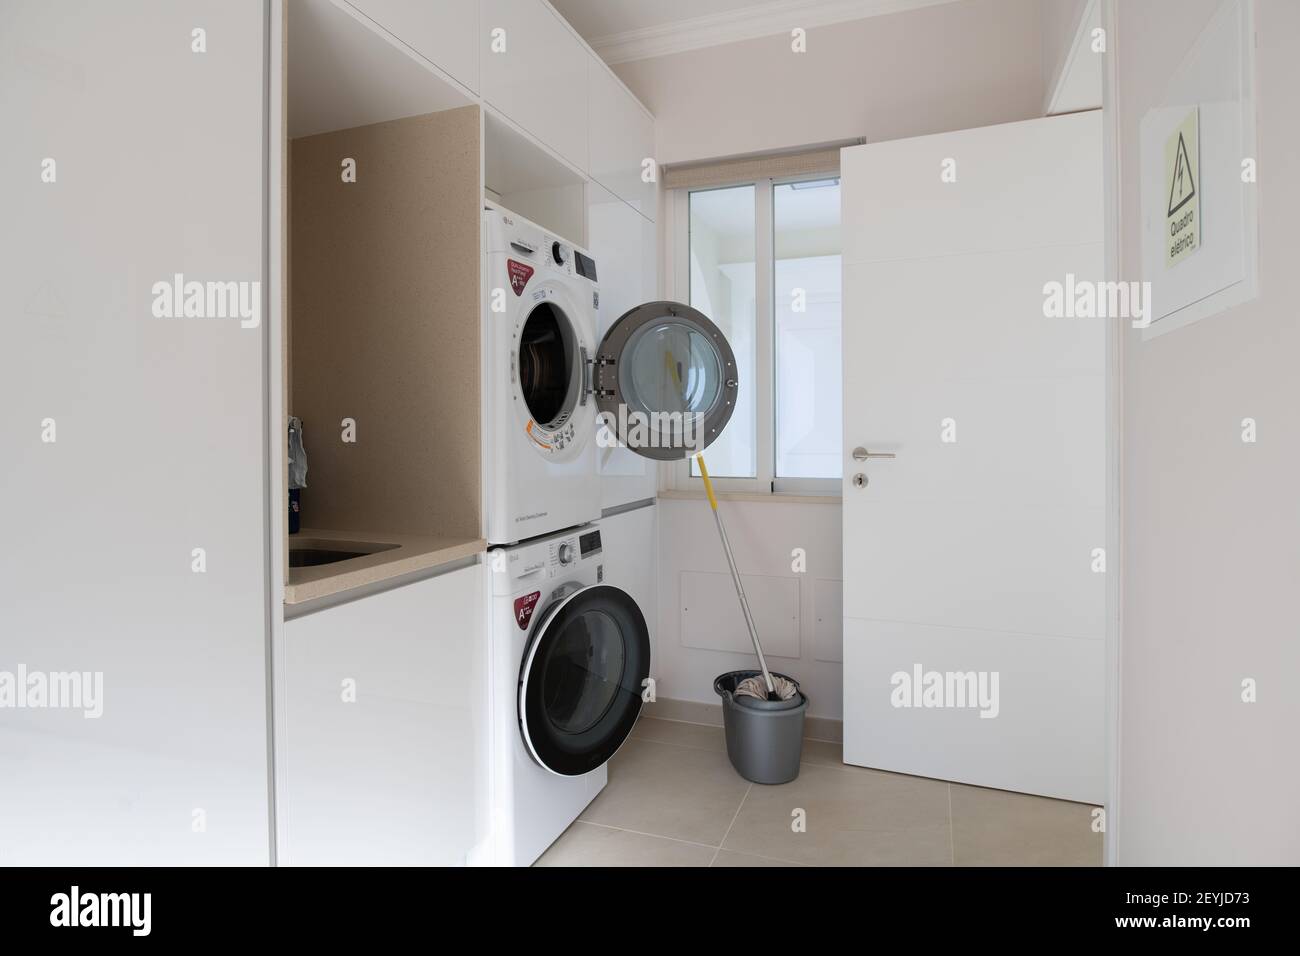 Lg washing machine hi-res stock photography and images - Alamy